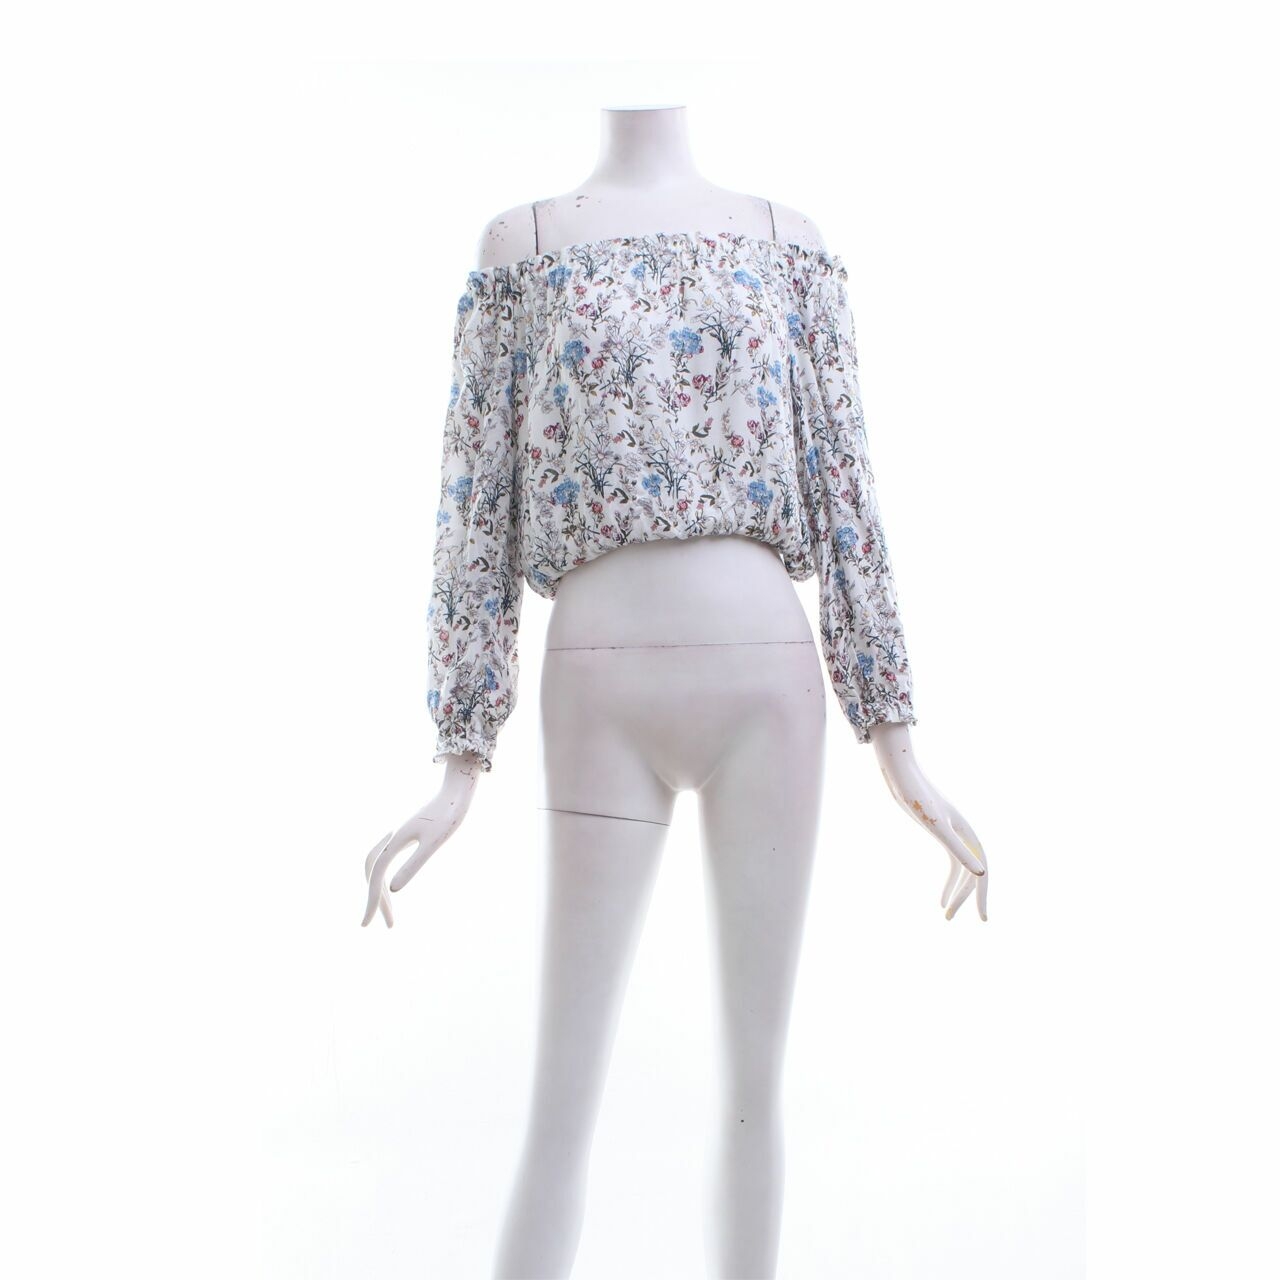 Isabel Marant x H&M Off White Floral Blouse